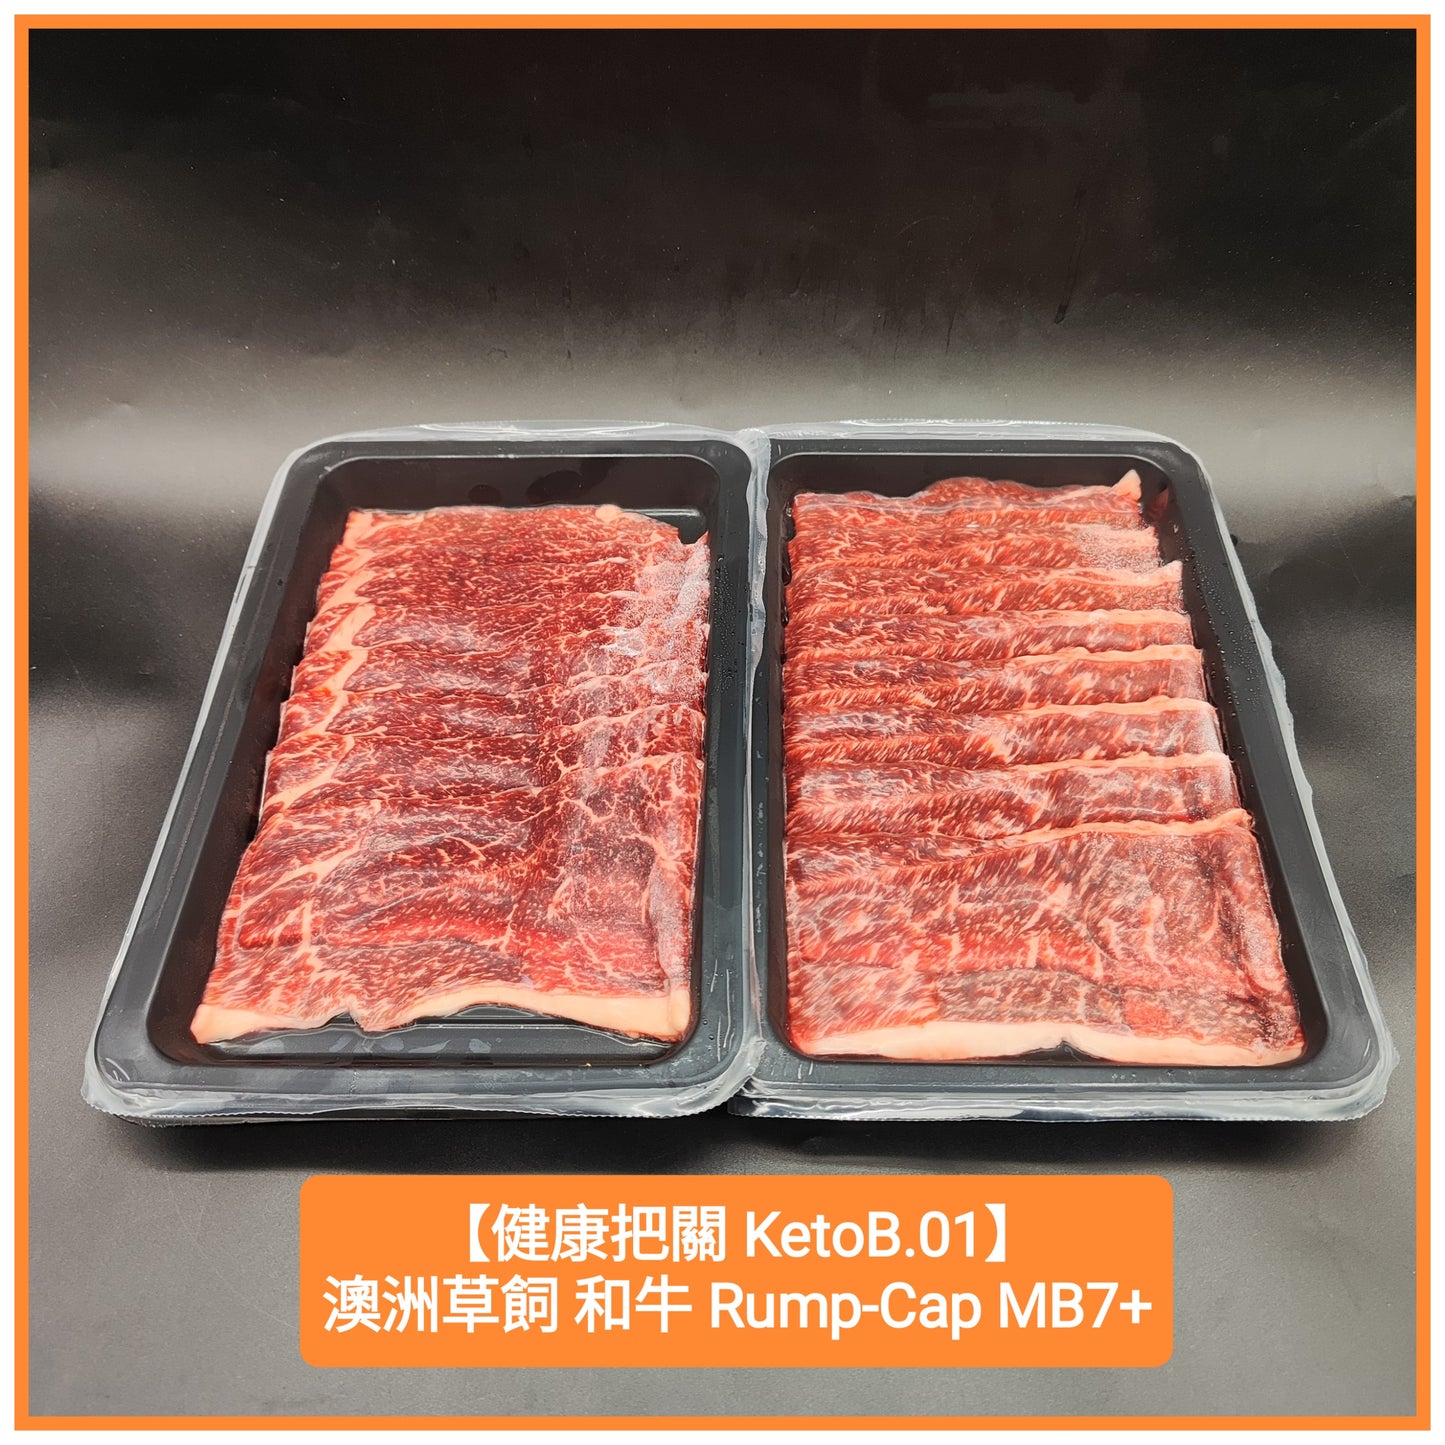 200g MB7+ Australia Grass Fed Wagyu Rump-Cap Slice 澳洲草飼 和牛 臀腰肉蓋 火煱片